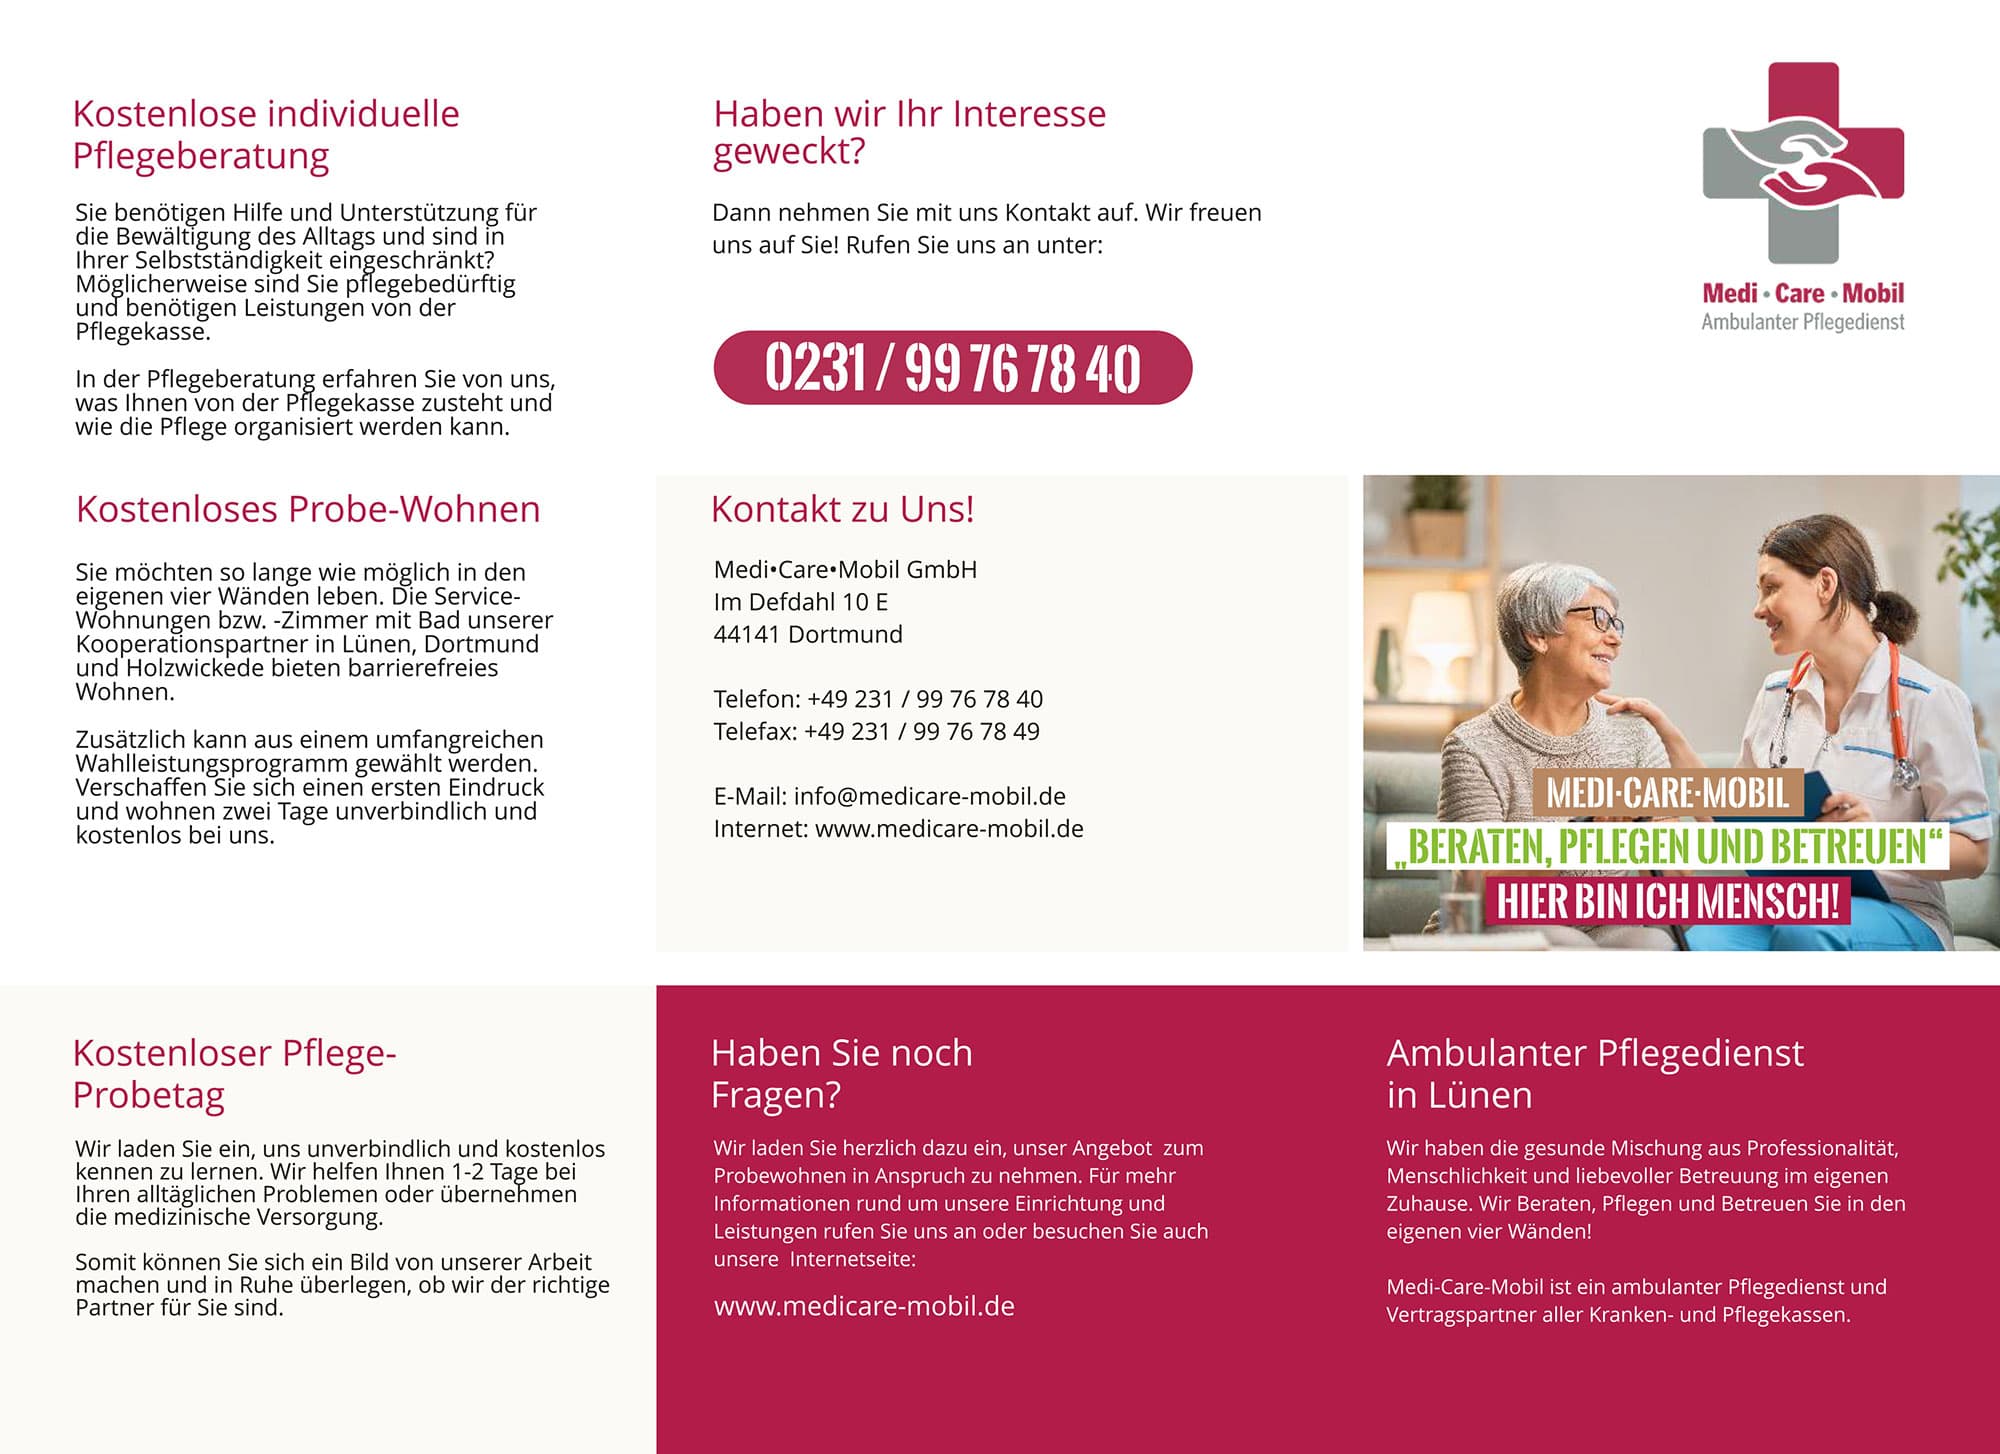 Medi•Care•Mobil GmbH